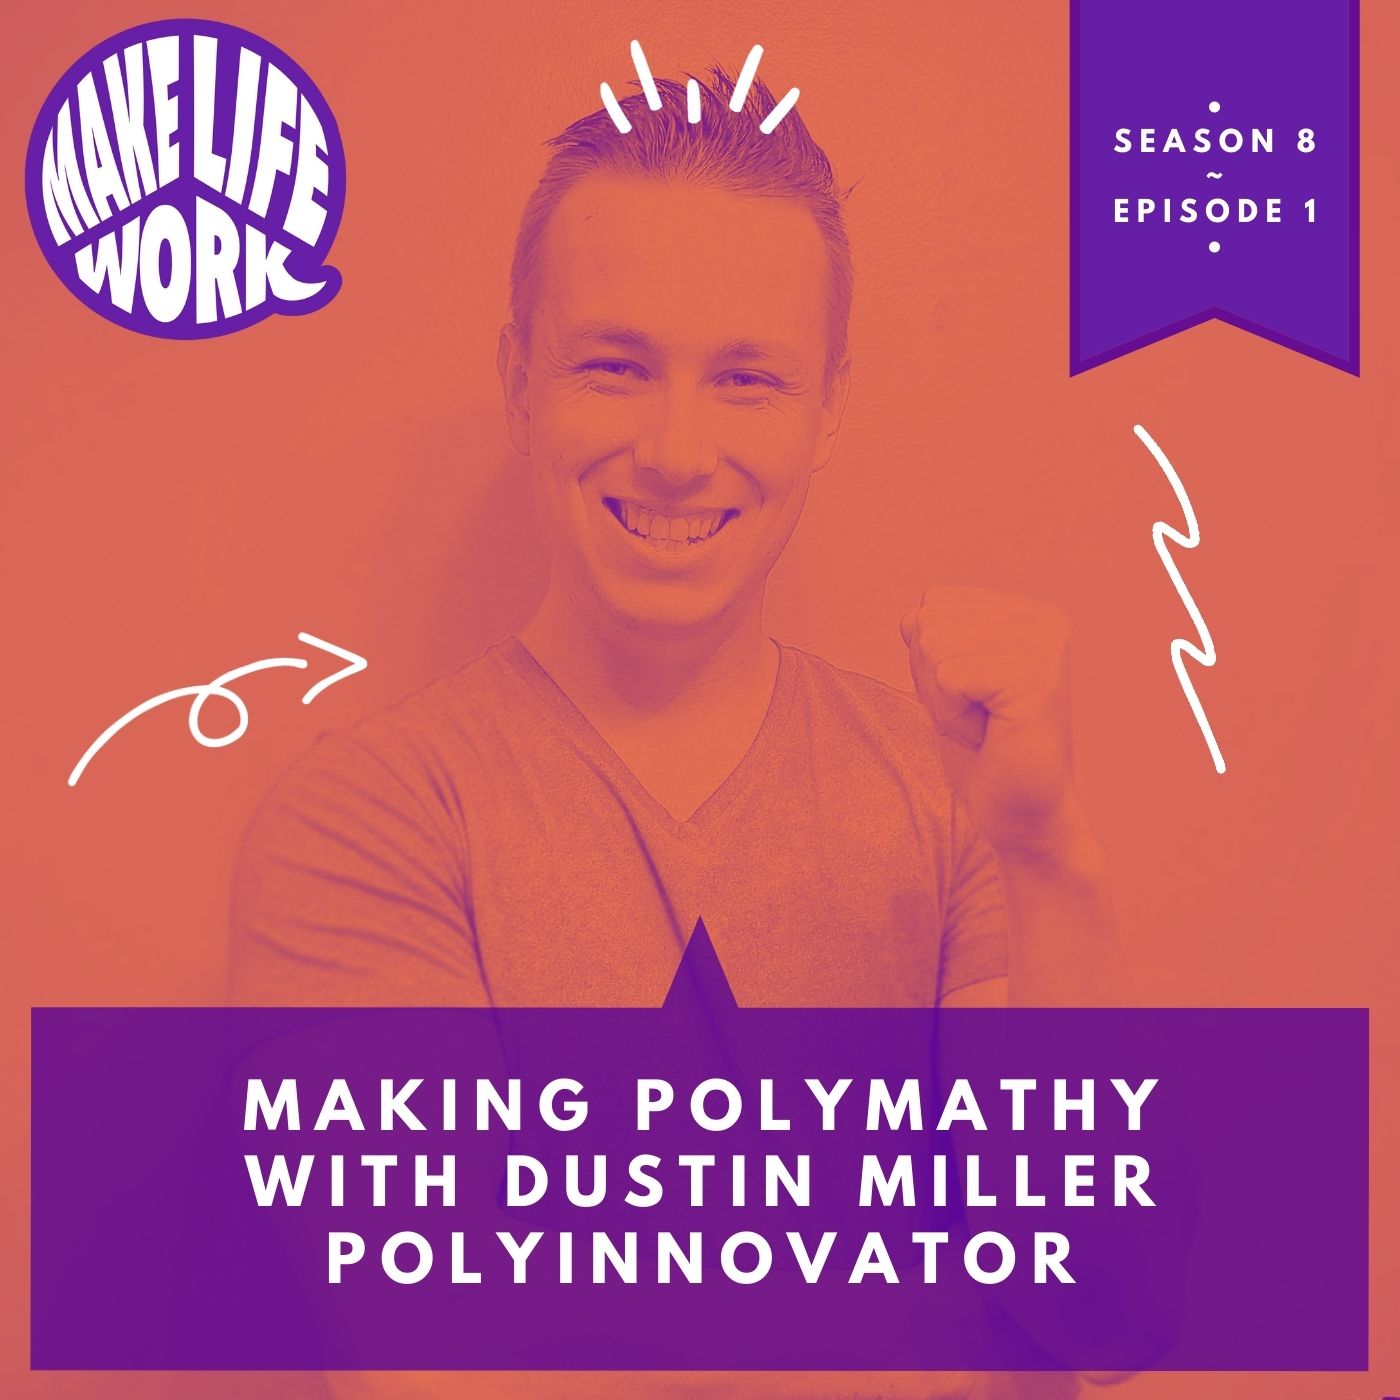 Making polymathy with Dustin Miller PolyInnovator